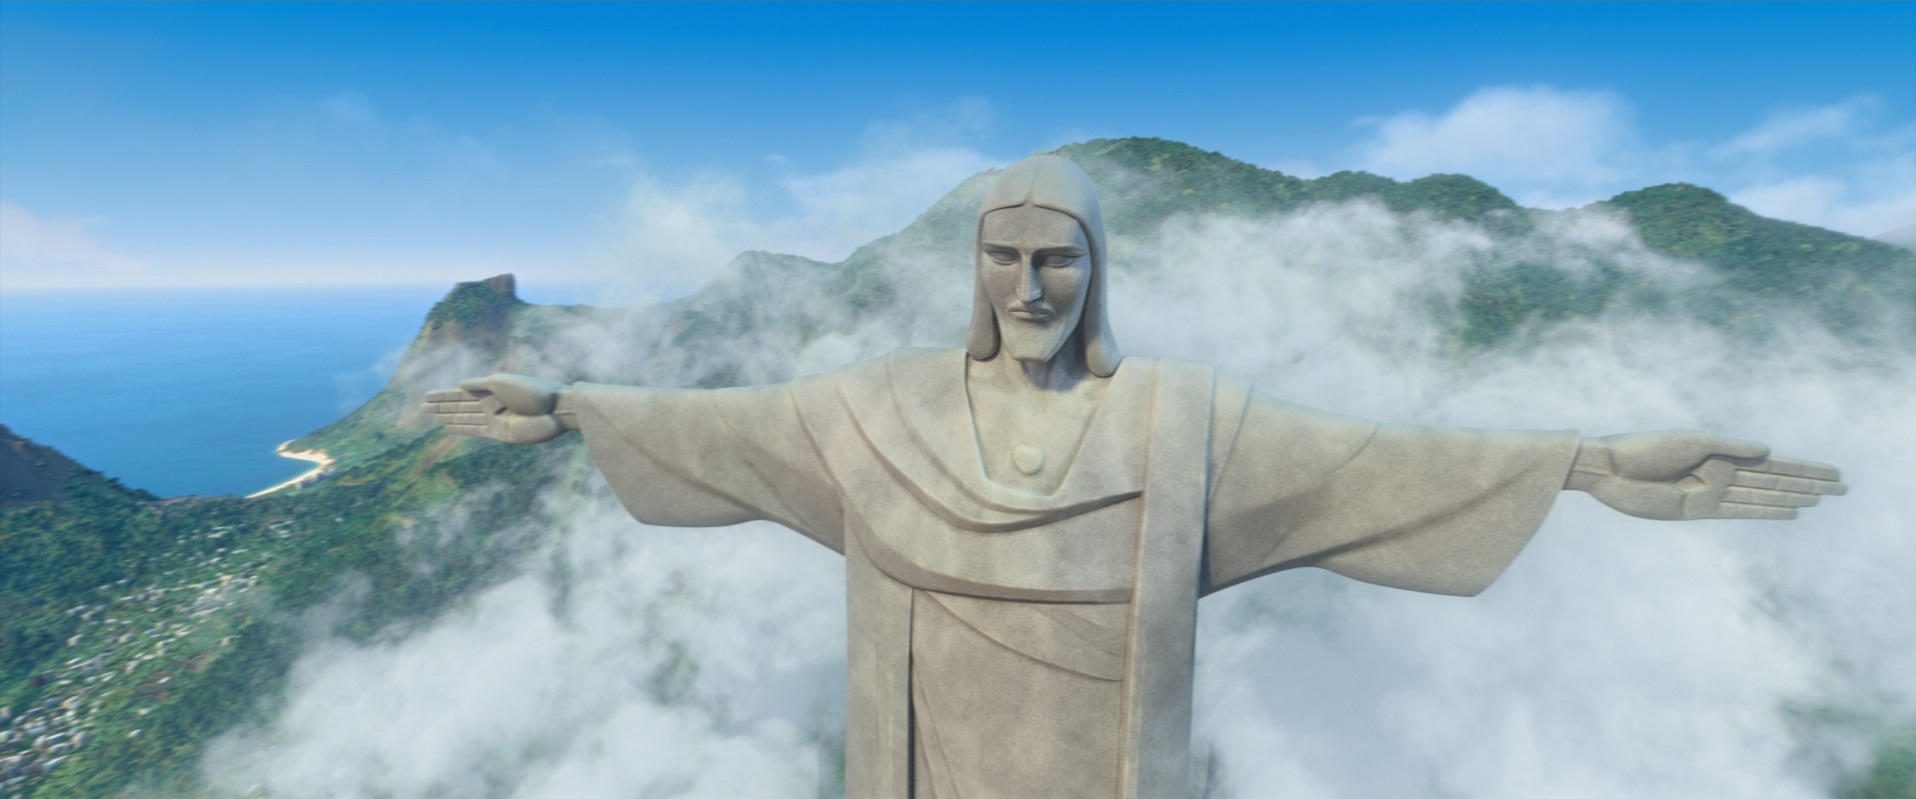 Christ the Redeemer (statue) - Wikipedia